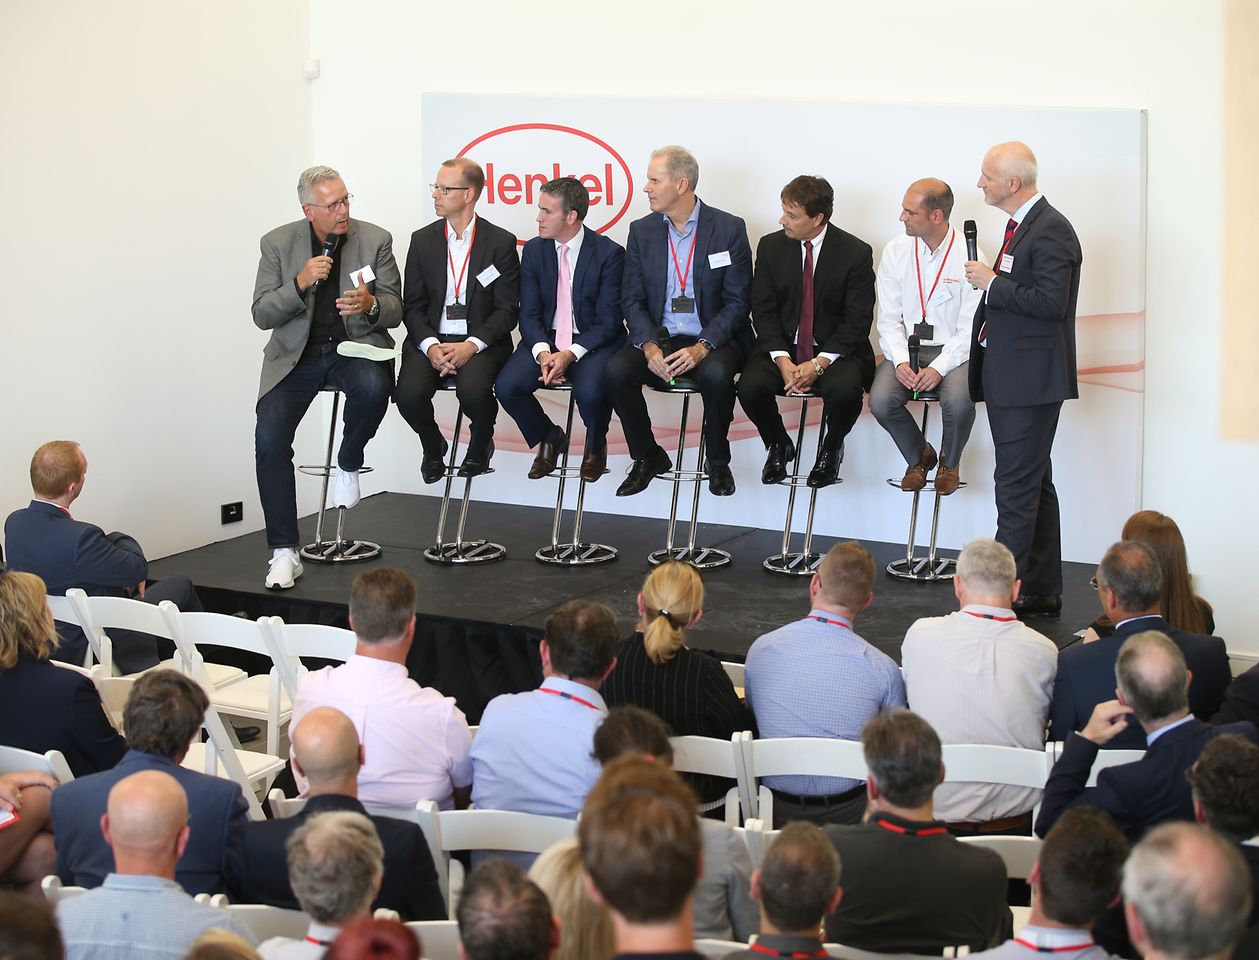 From left to right: Joe DiSimone of Carbon; Kersten Heuser of Siemens; Government Minister Damien English; Stephen Nigro of HP; Jerry Perkins of Henkel; Chay Allen of Renishaw; and host Ged McGurk of Henkel